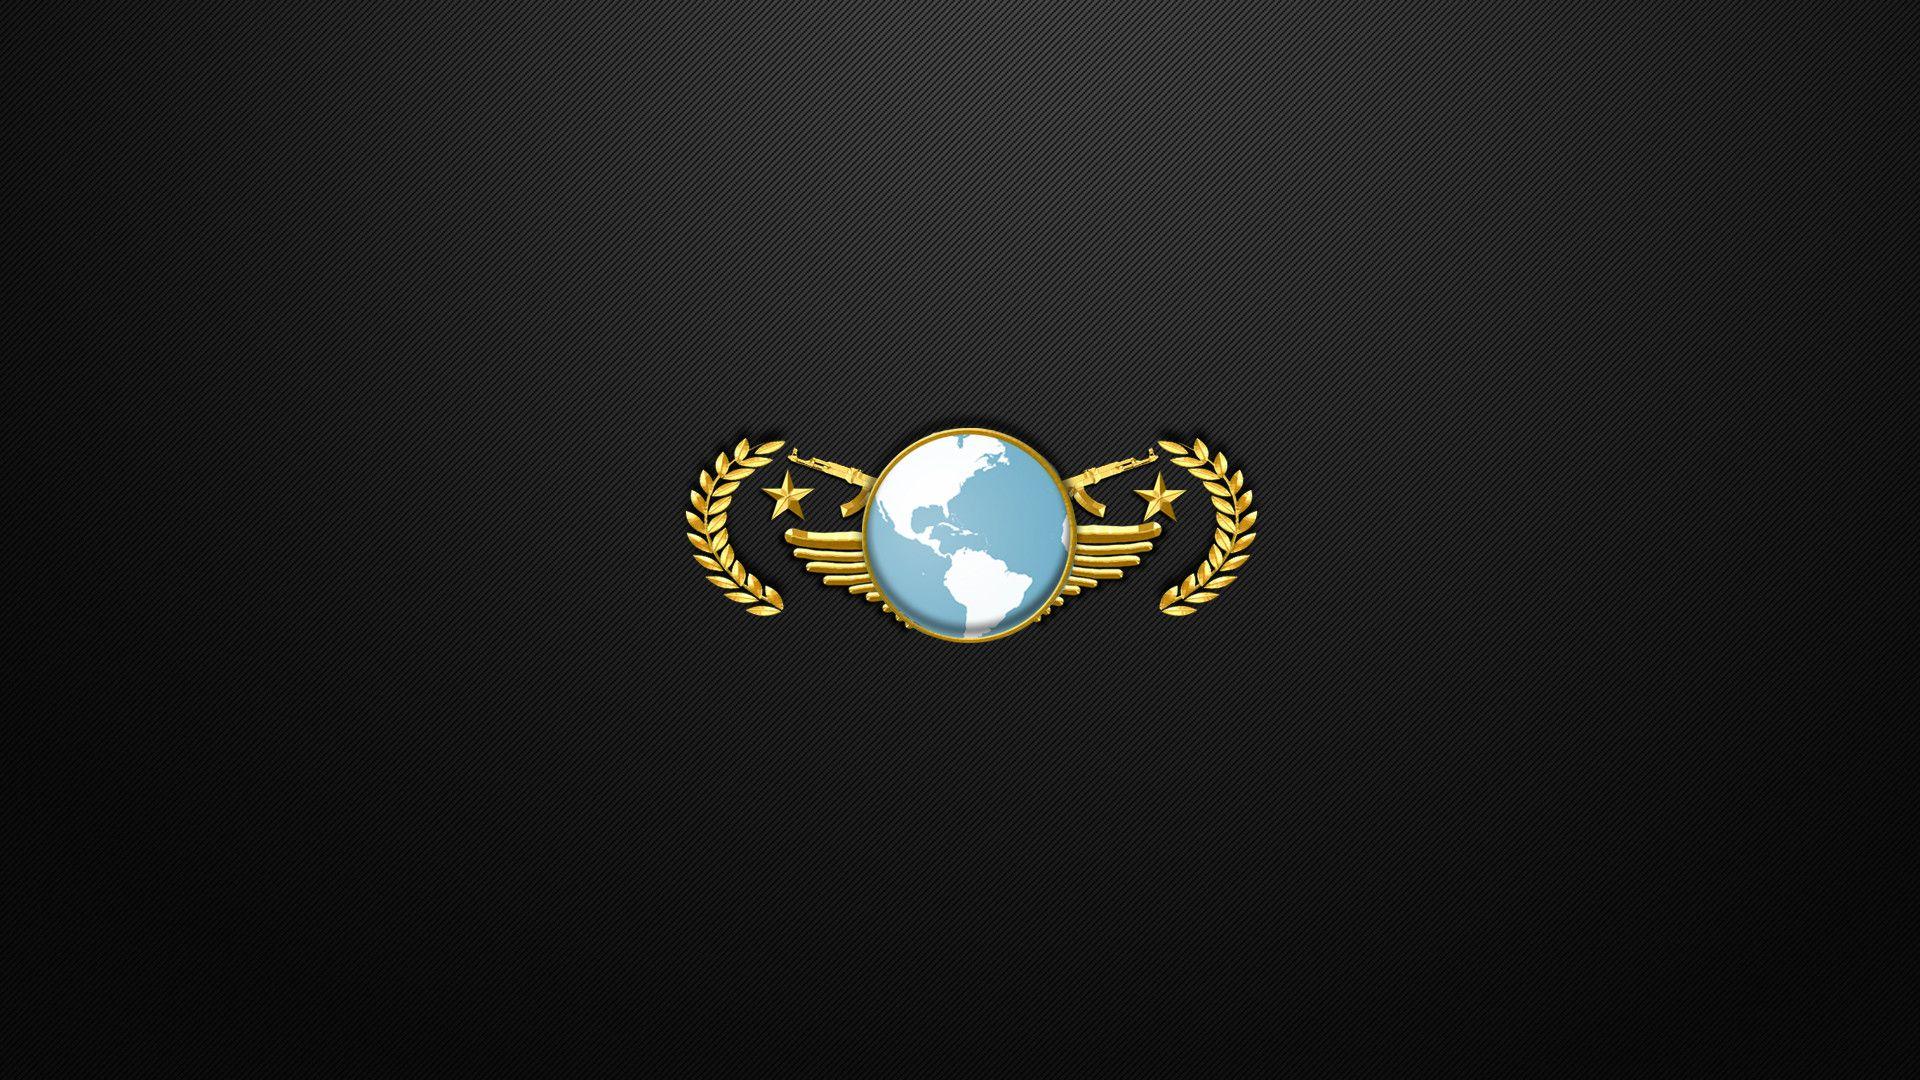 Global HD Logo - Amazing CS:GO Wallpaper (Background Image). Skins.cash